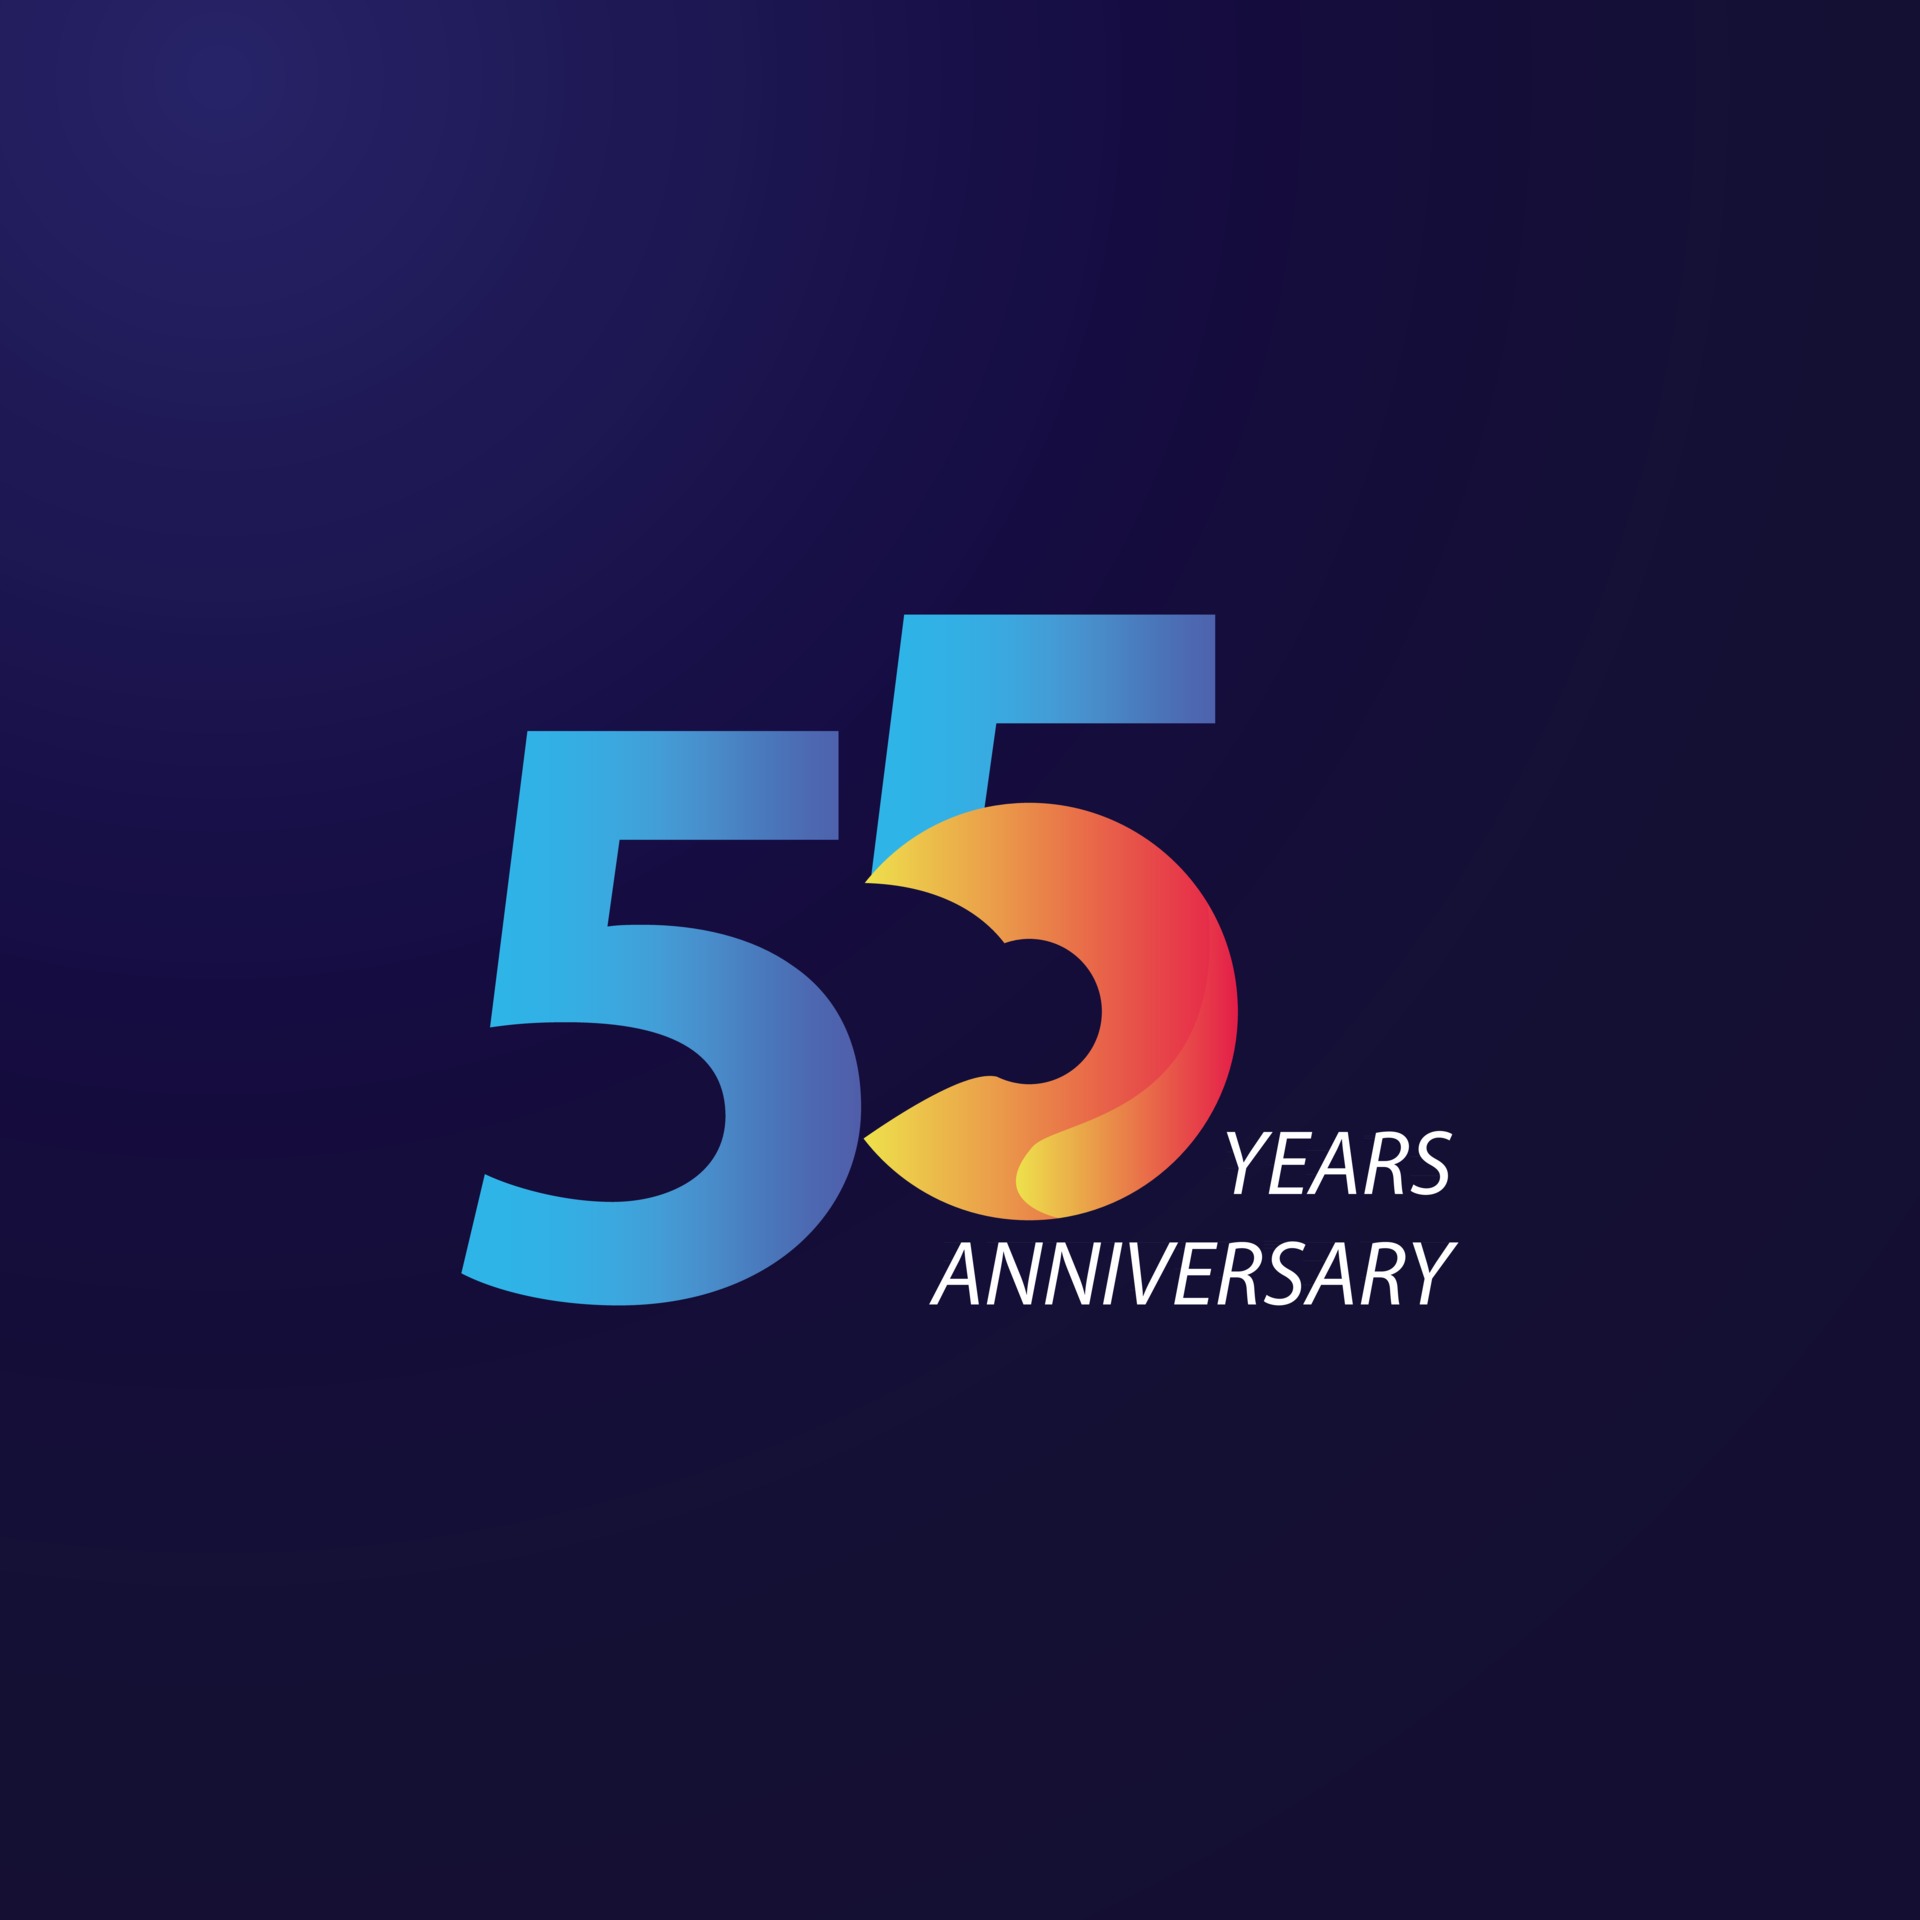 55 Years Anniversary Celebration Vector Template Design Illustration ...